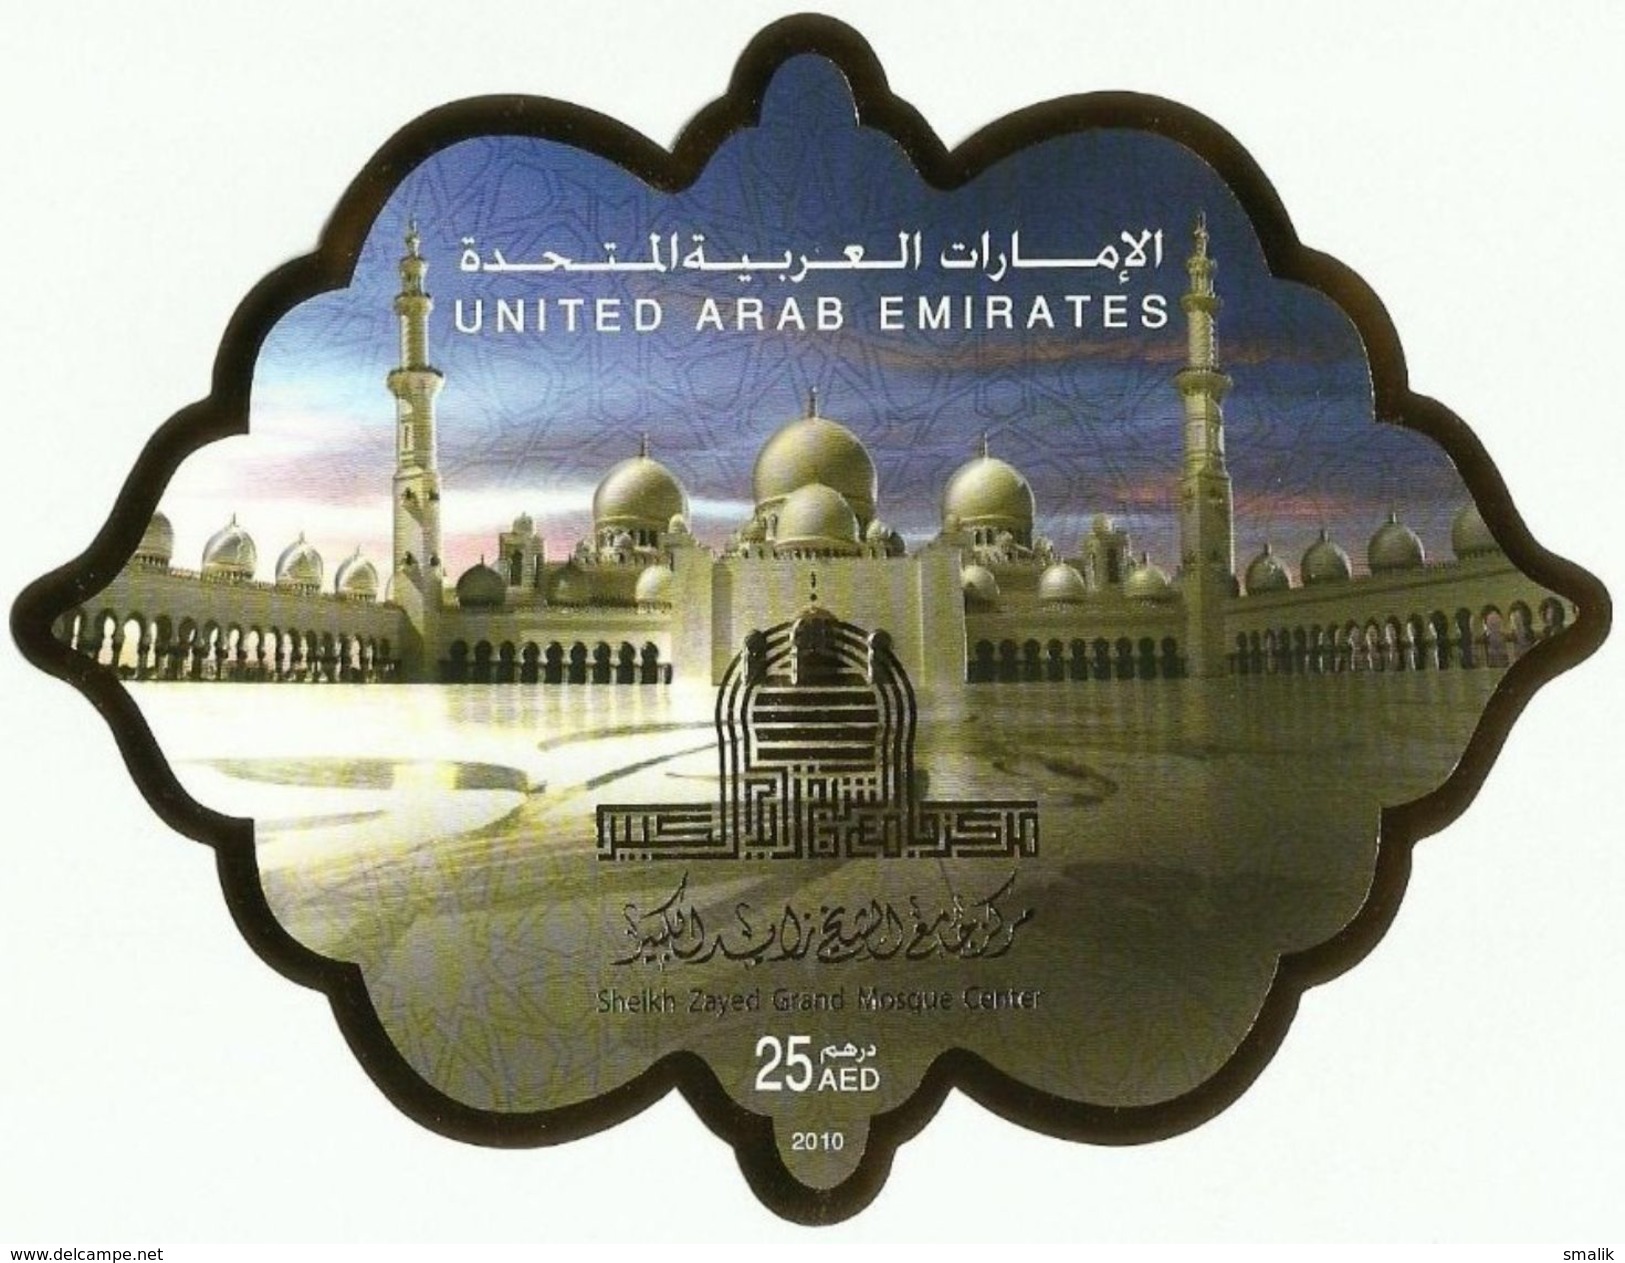 UAE United Arab Emirates 2010 MNH - Sheikh Zayed Grand Mosque, Gold Foil Embossed Unusual Odd Shape Miniature Sheet - United Arab Emirates (General)